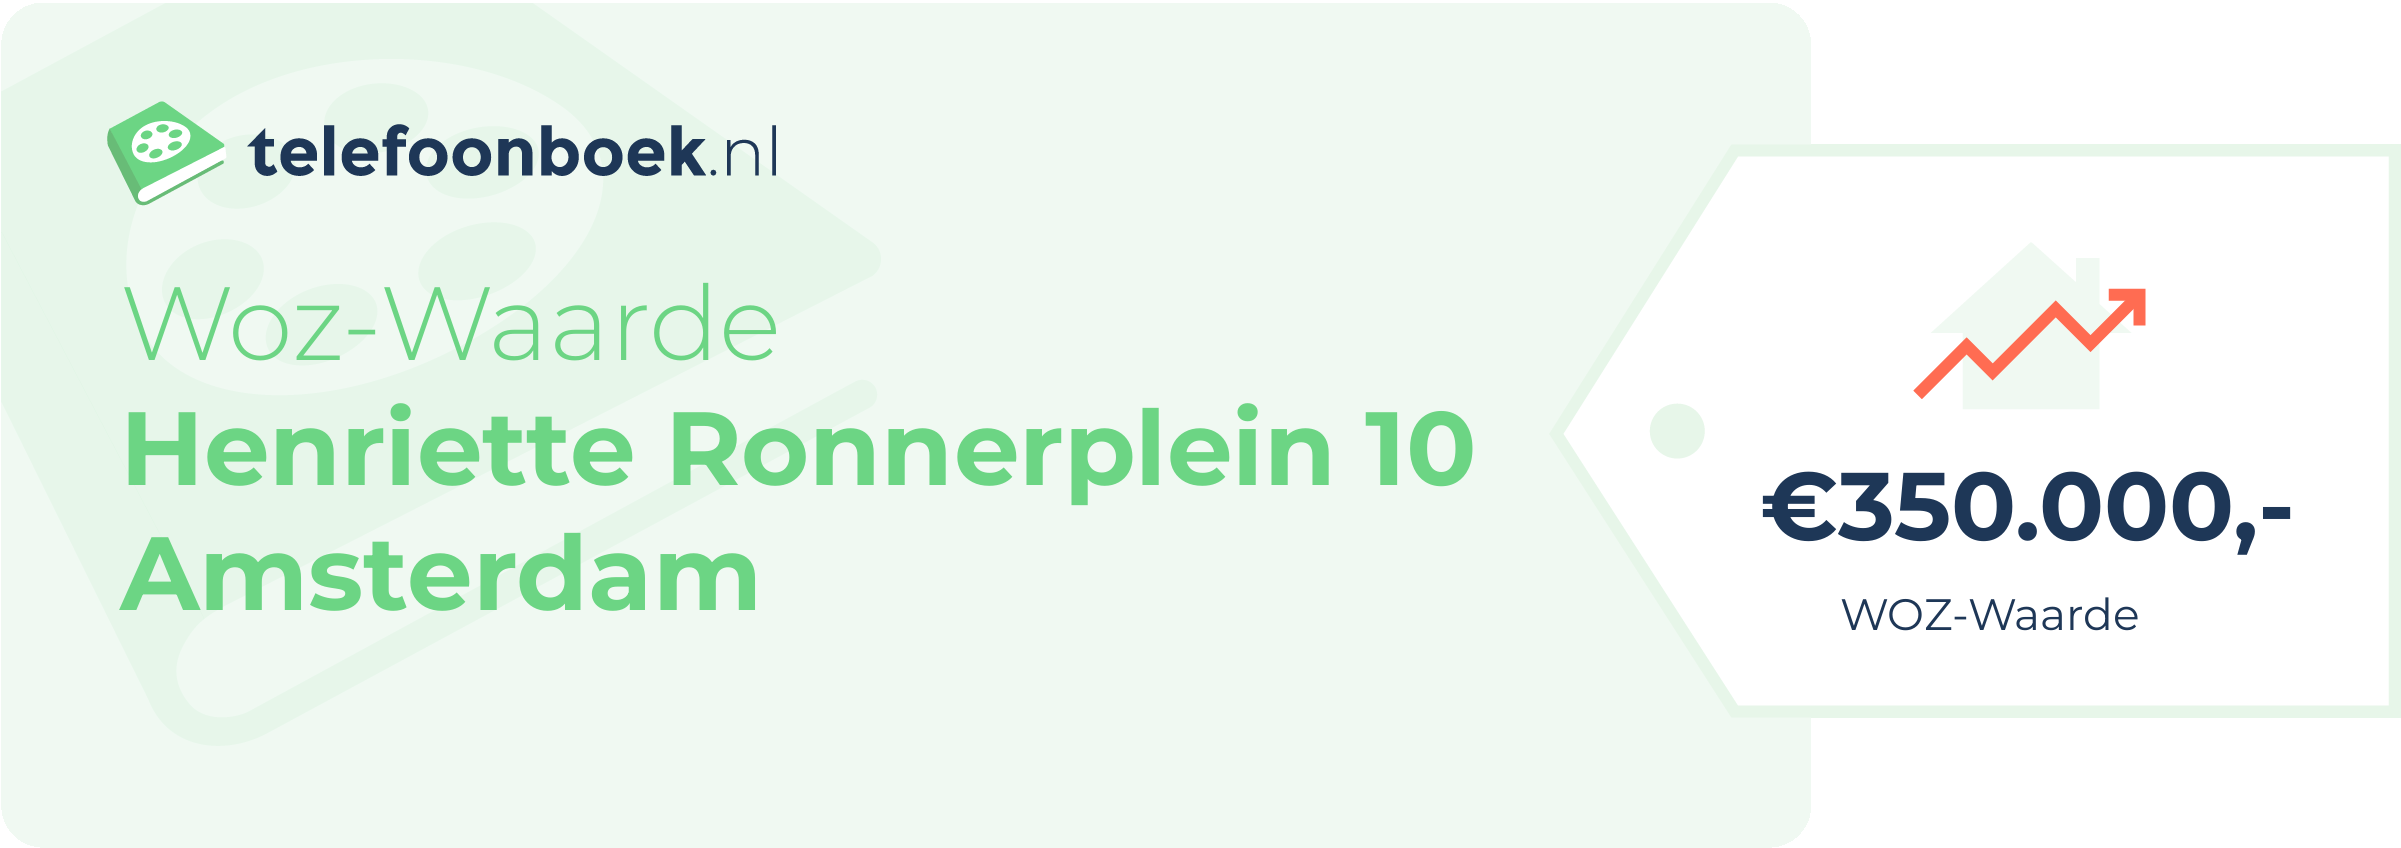 WOZ-waarde Henriette Ronnerplein 10 Amsterdam